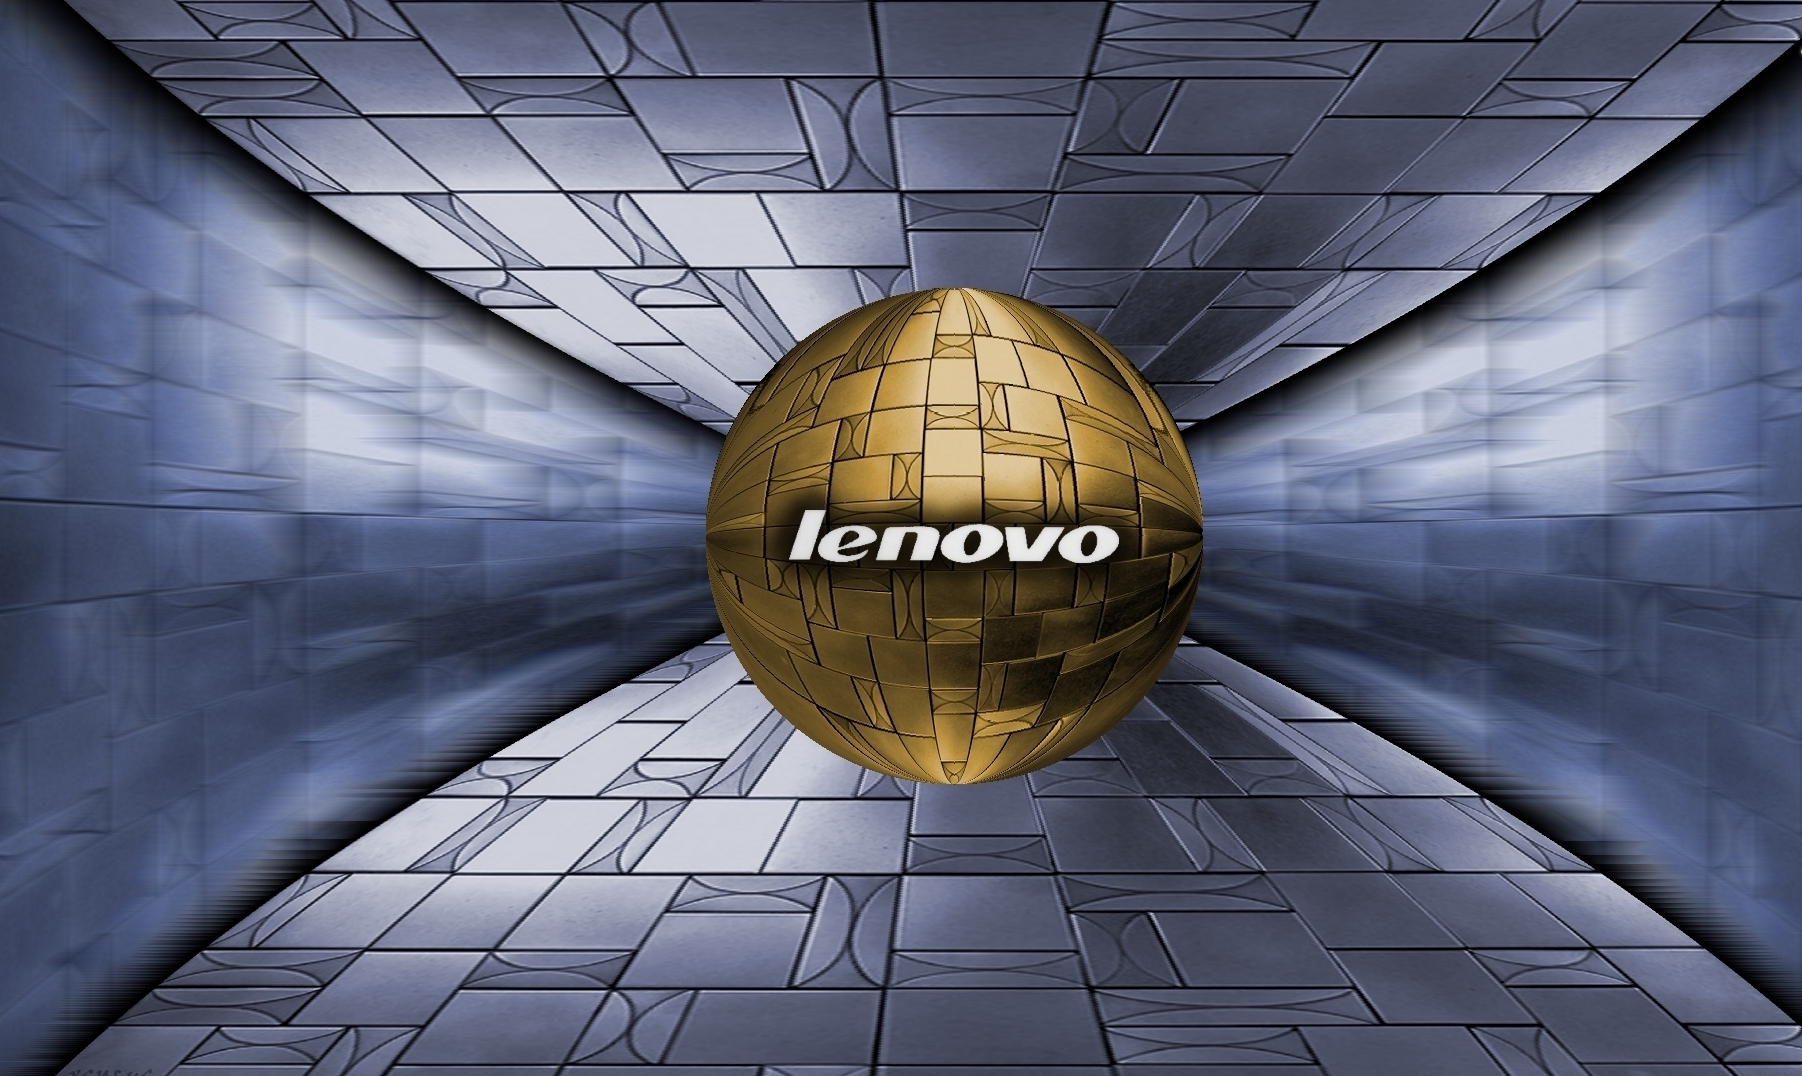 Download wallpapers Lenovo logo, light neon art, Lenovo emblem, Lenovo neon  logo, creative art, Lenovo for desktop free. Pictures for desktop free